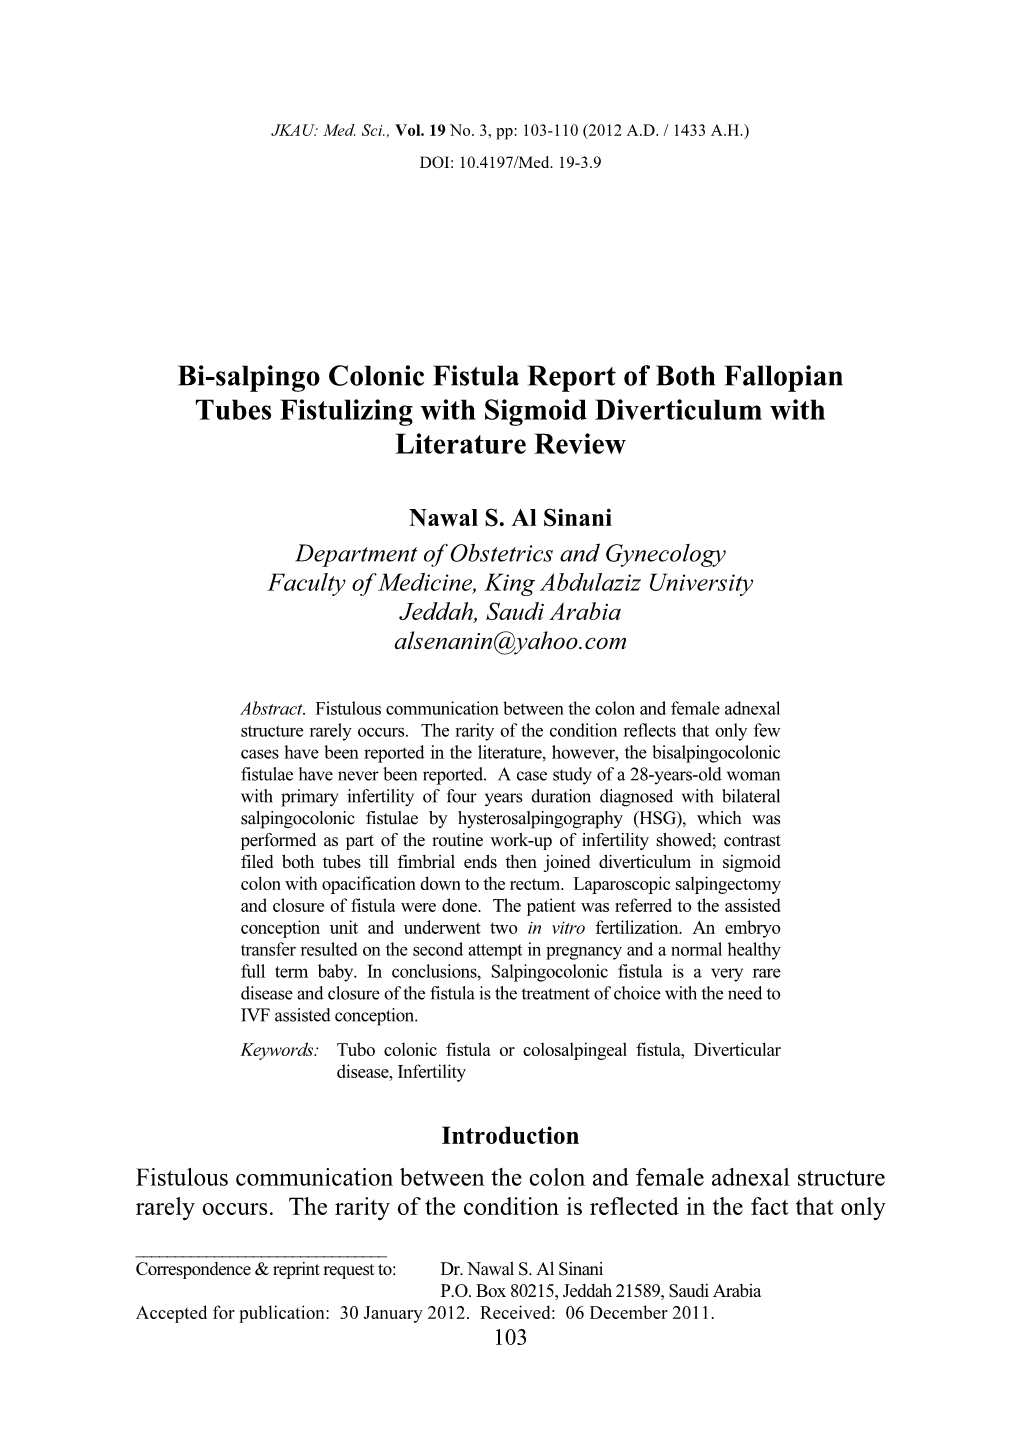 Bi-Salpingo Colonic Fistula Report of Both Fallopian Tubes Fistulizing with Sigmoid Diverticulum with Literature Review